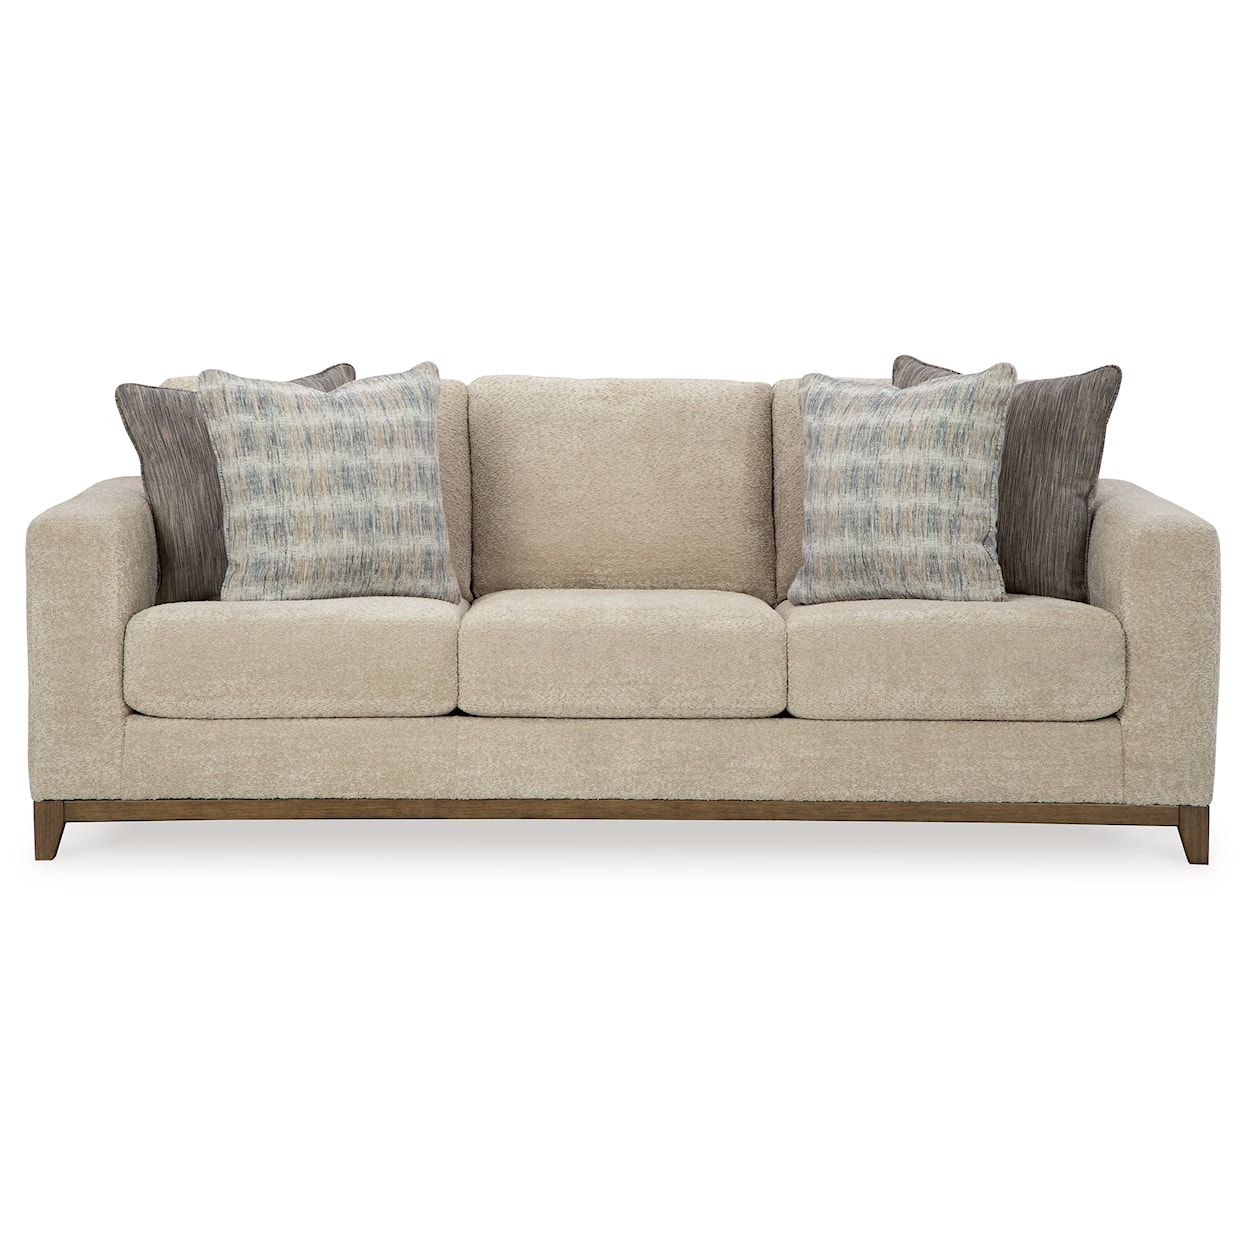 Ashley Furniture Signature Design Parklynn Sofa